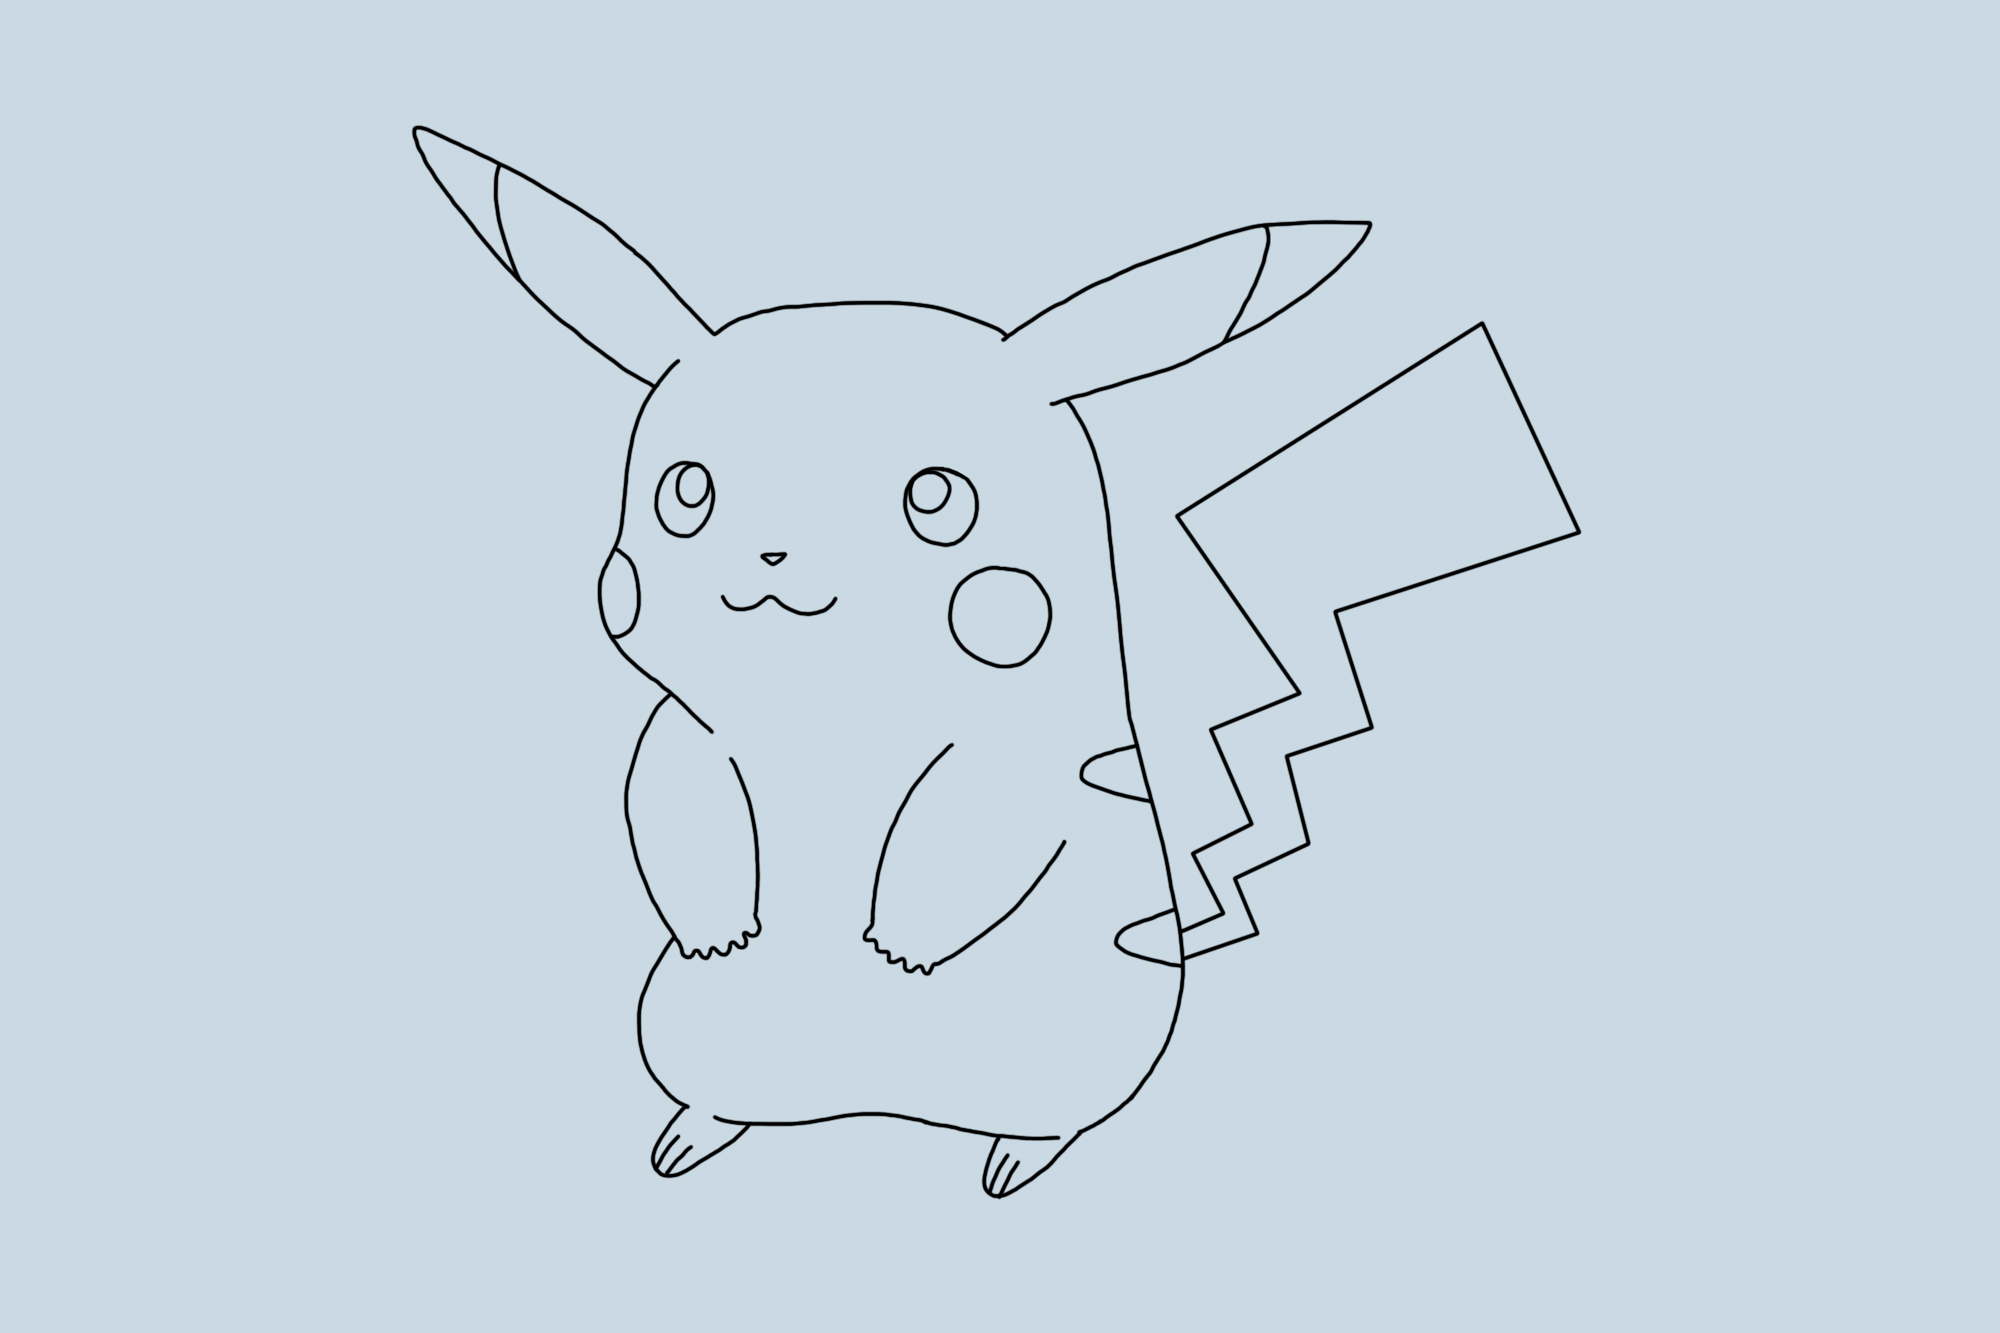 how do you draw pikachu